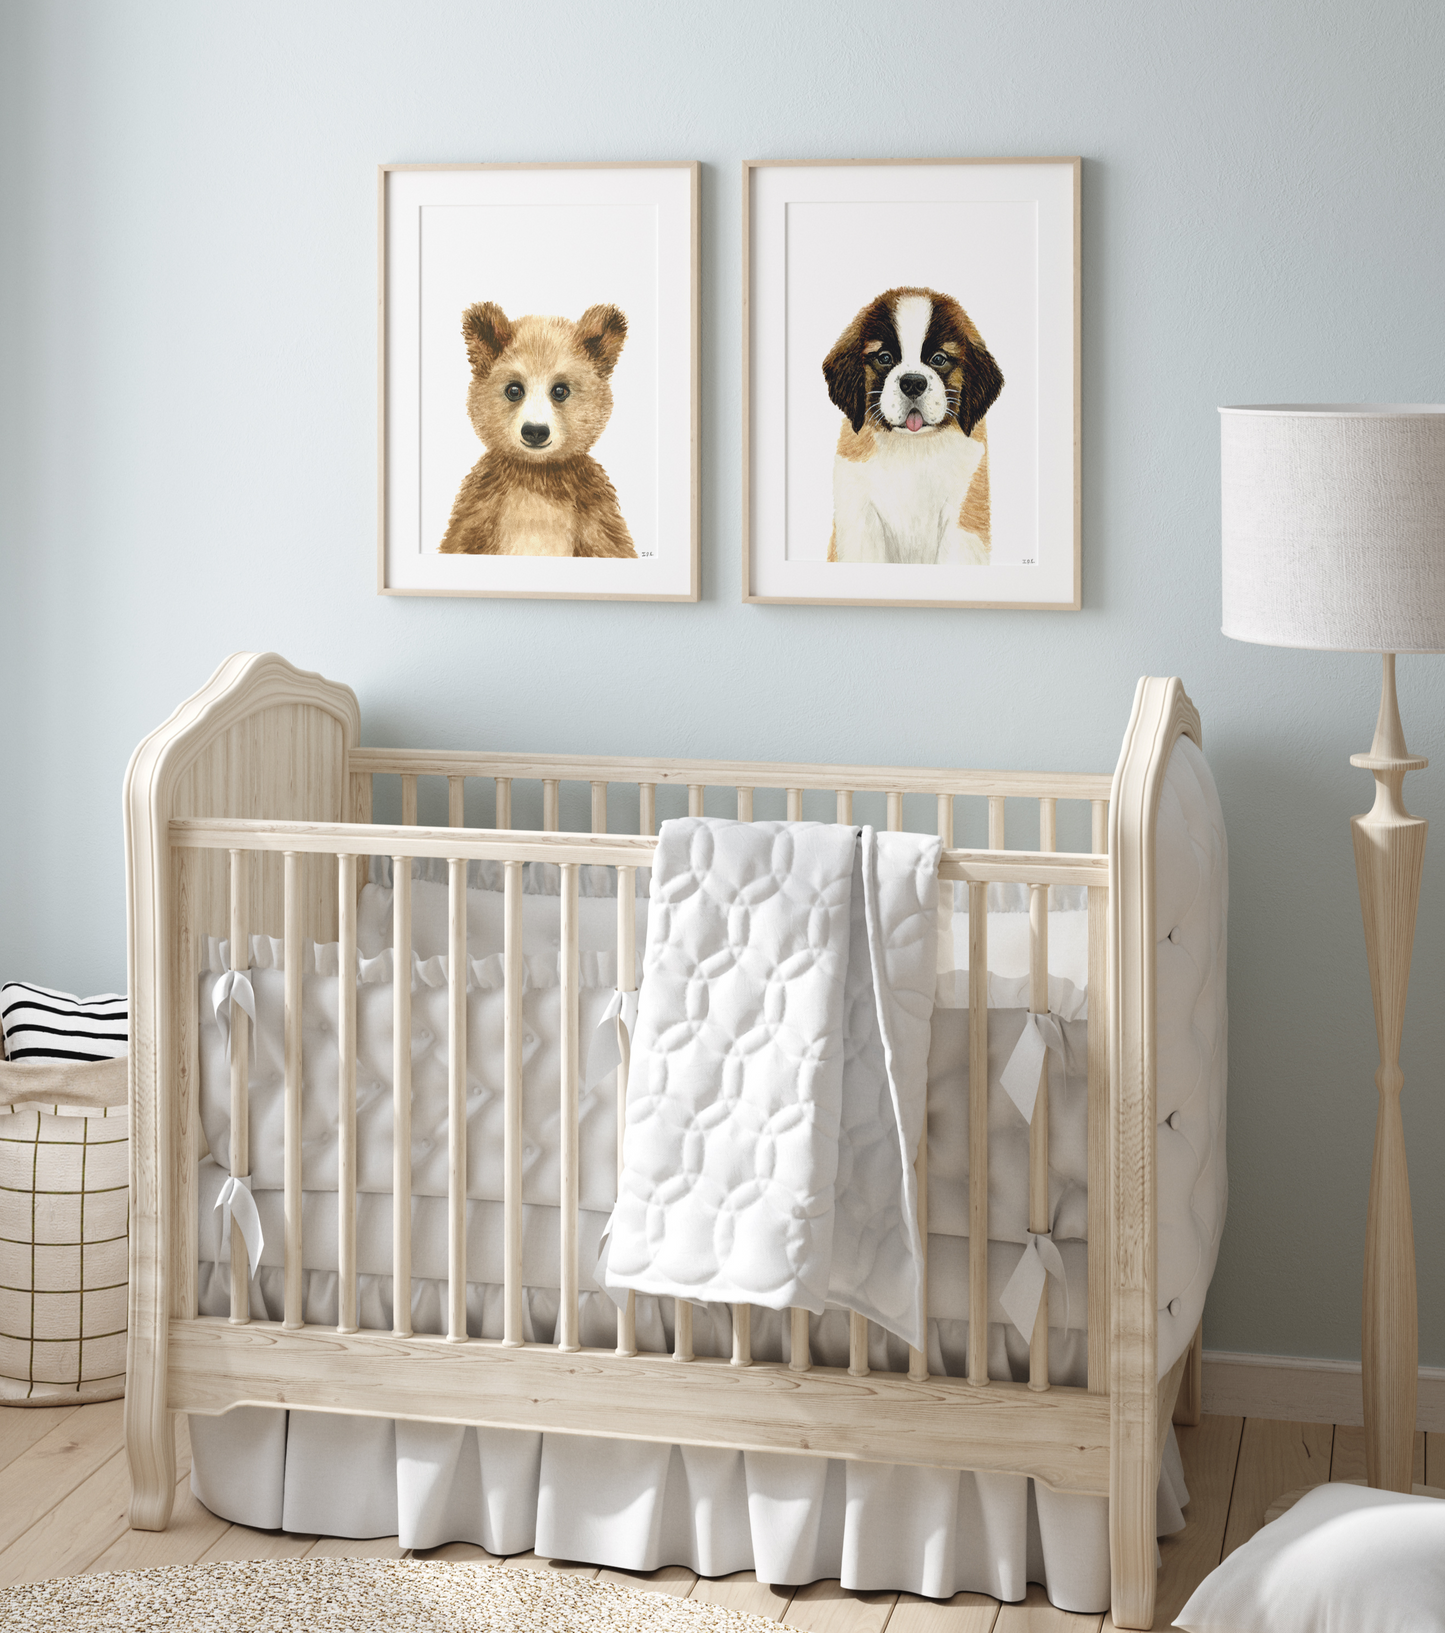 Set of 2 nursery animal prints above baby crib: bear and saint bernard dog